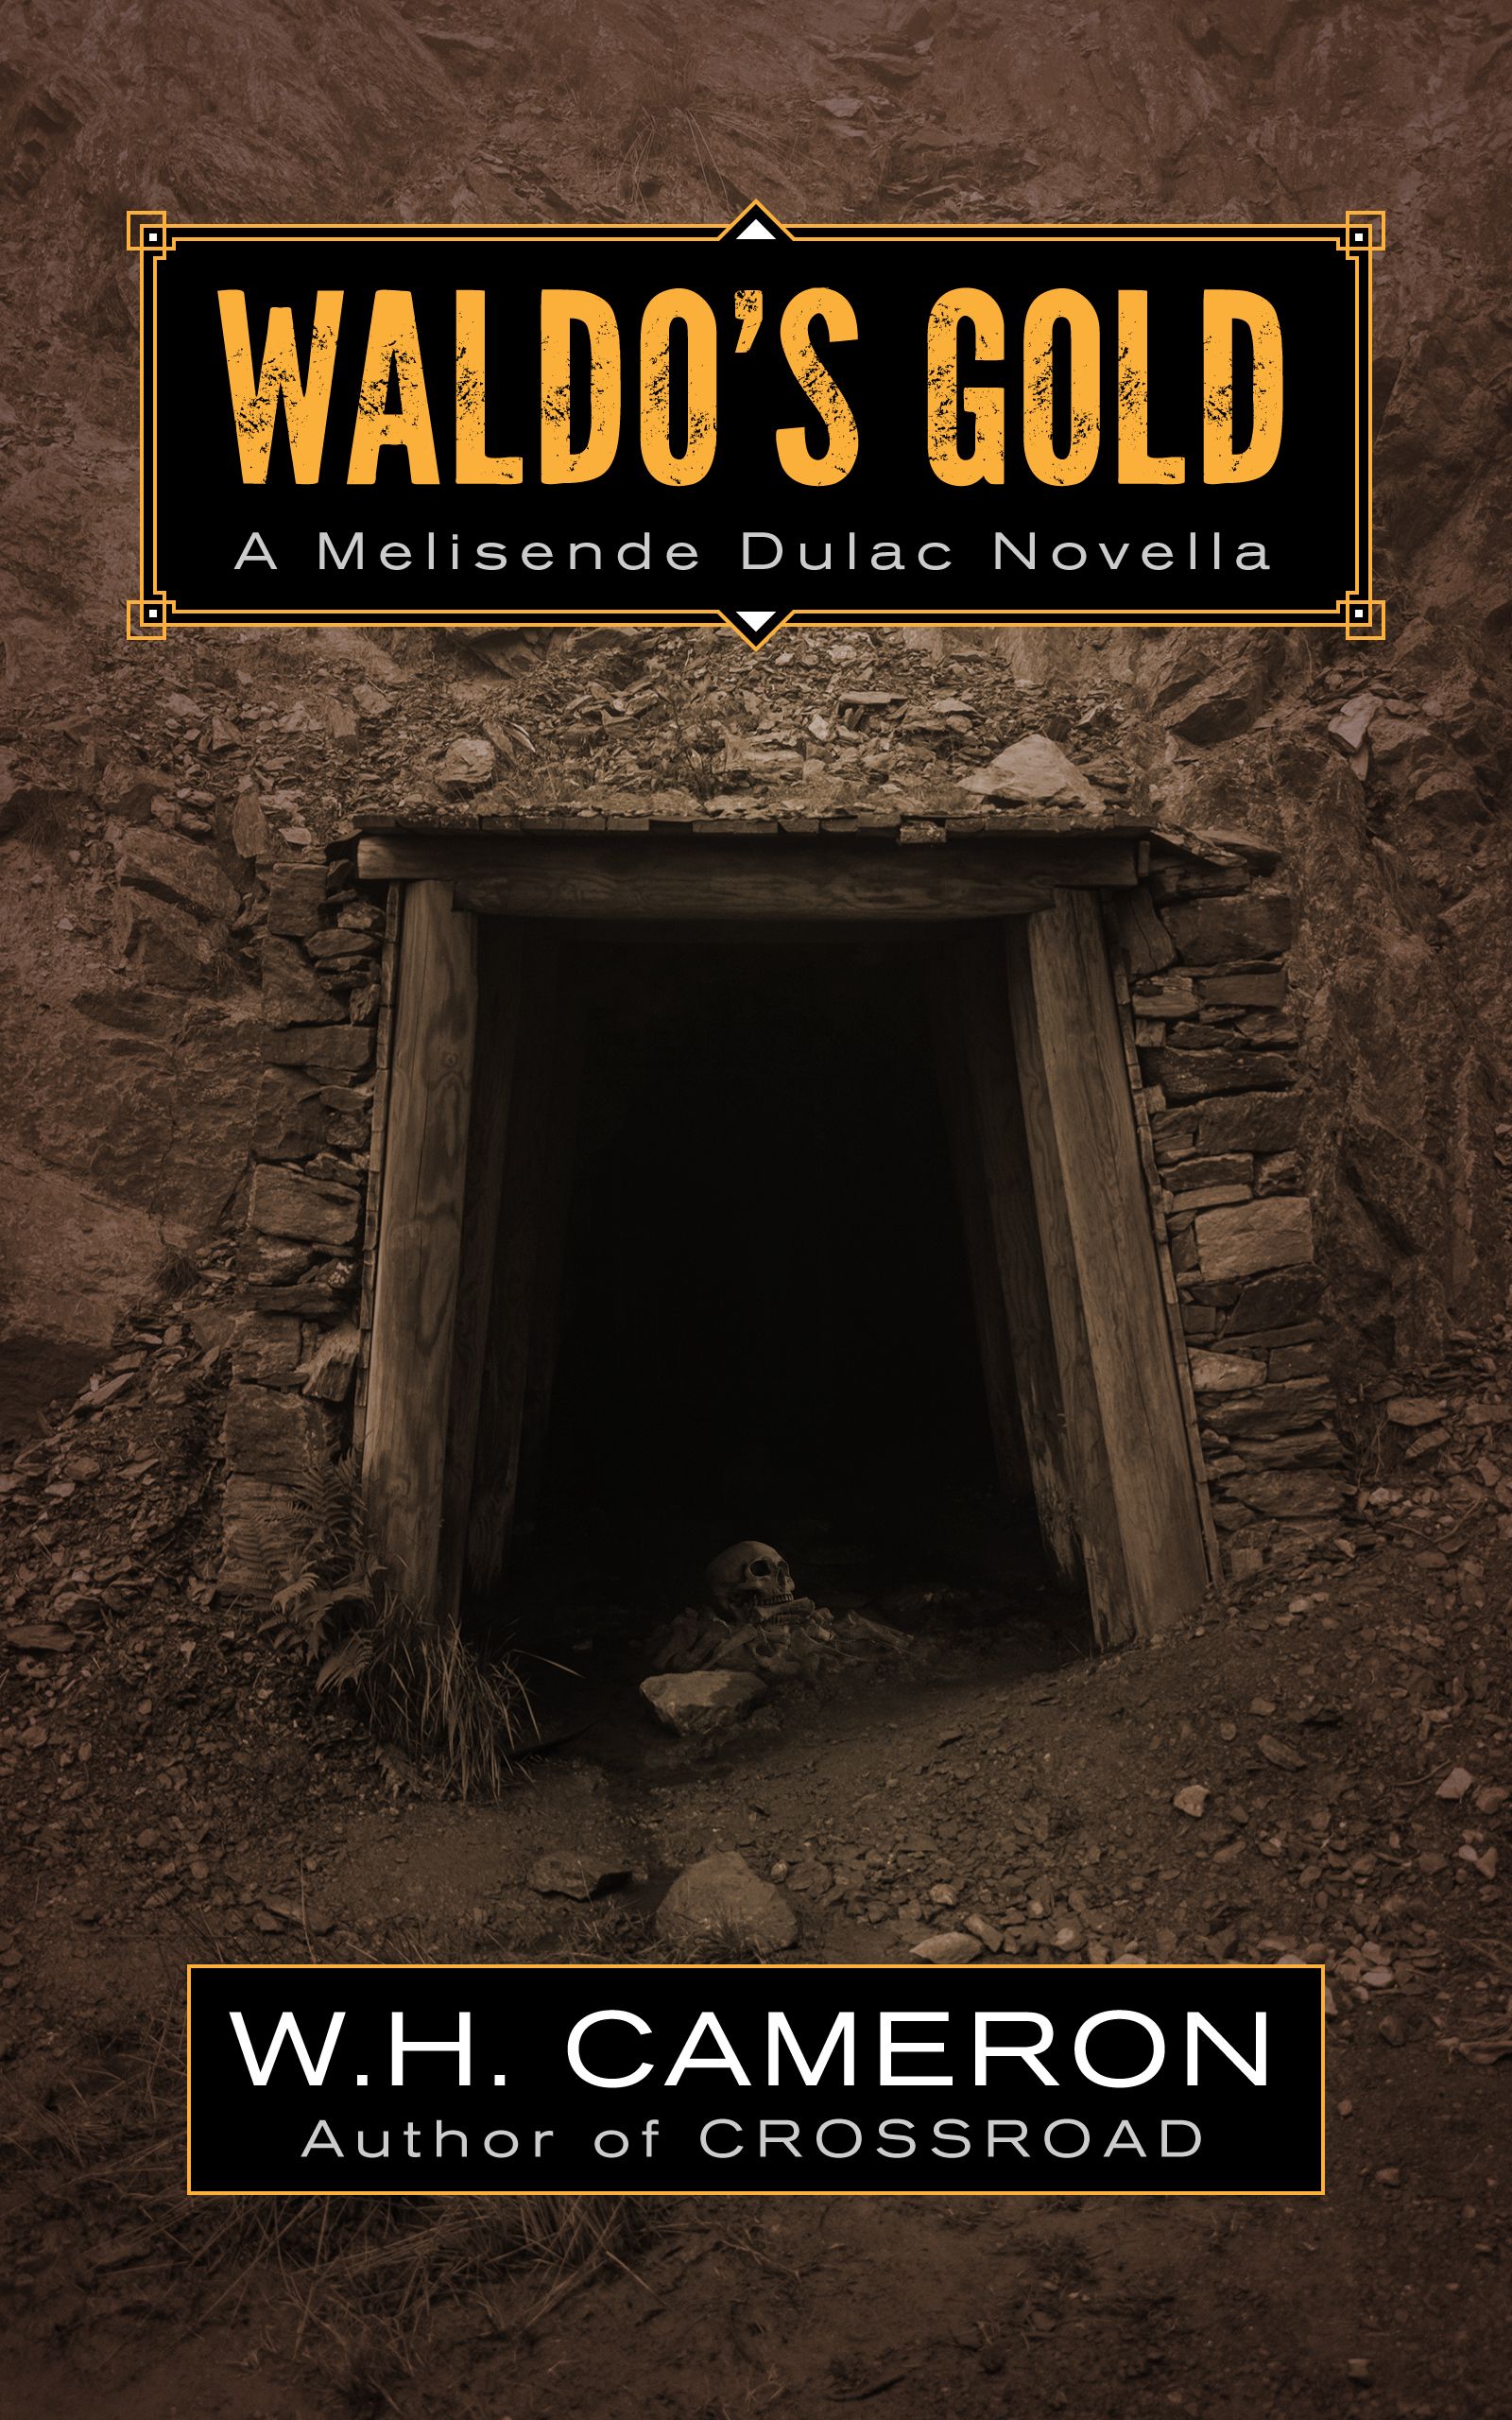 Waldo's Gold, a Melisende Dulac novella, by W.H. Cameron